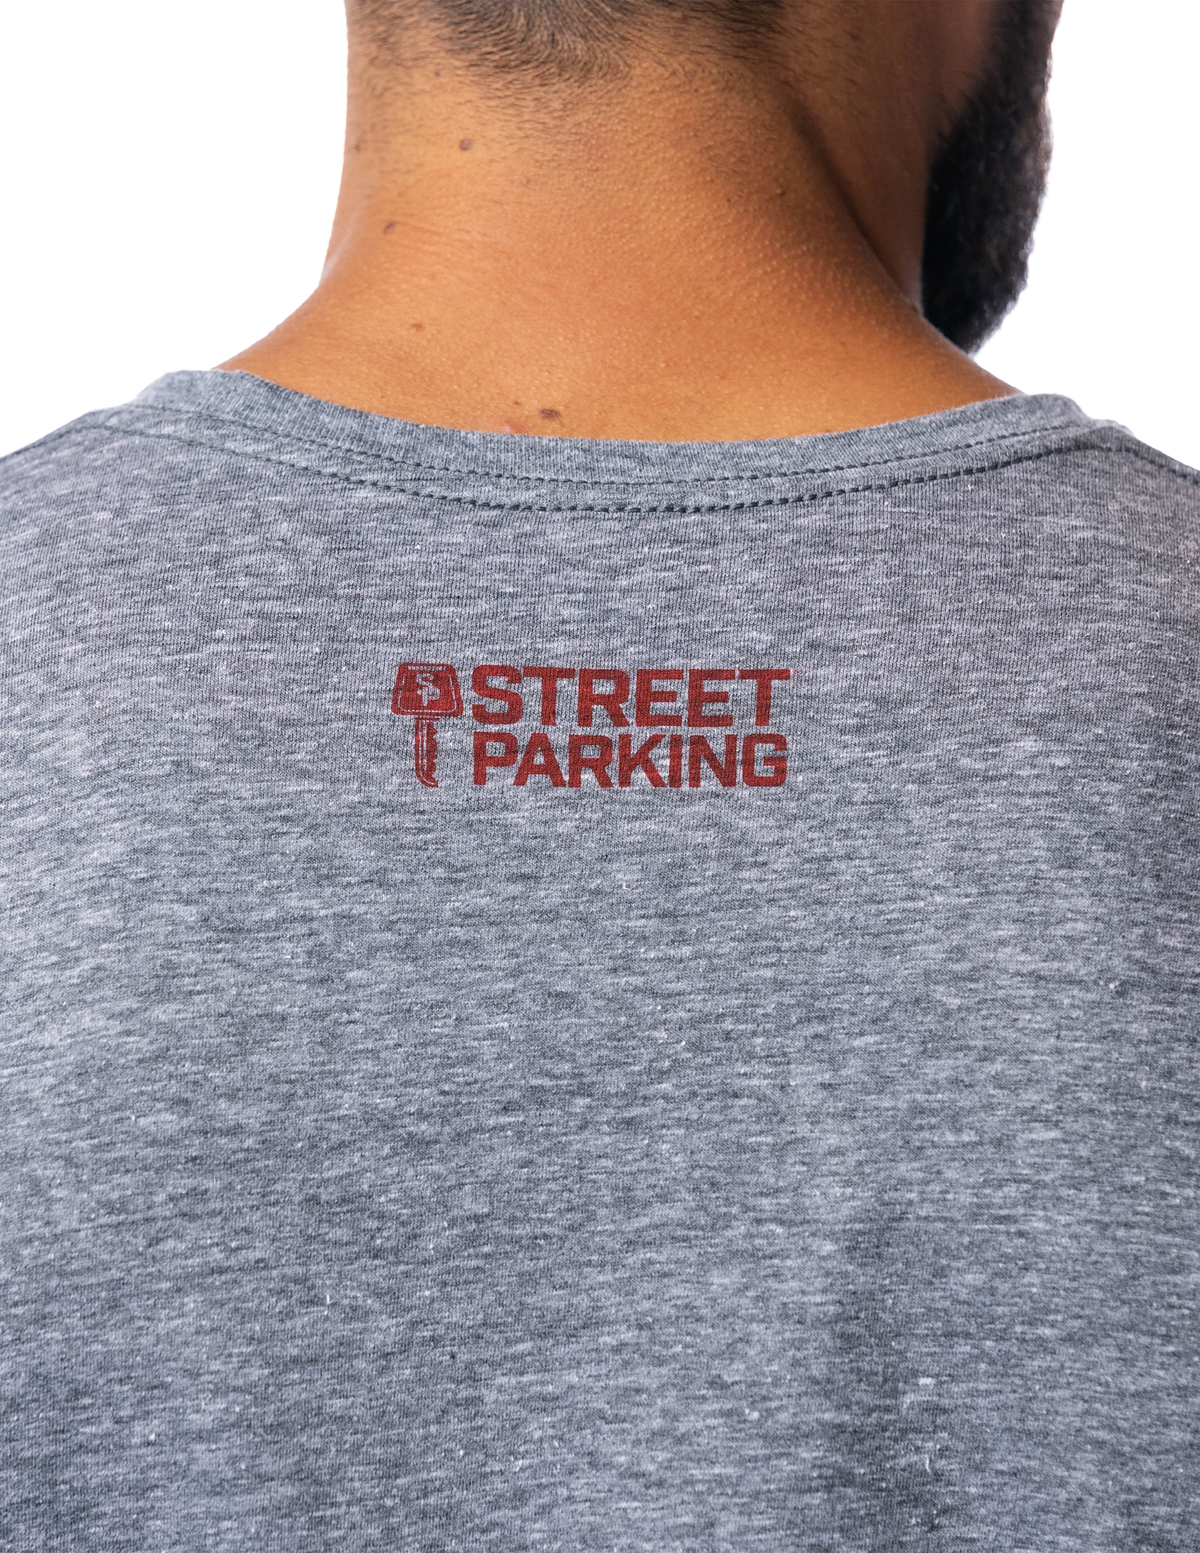 2022 Team Gallo Unisex Tee - Street Parking